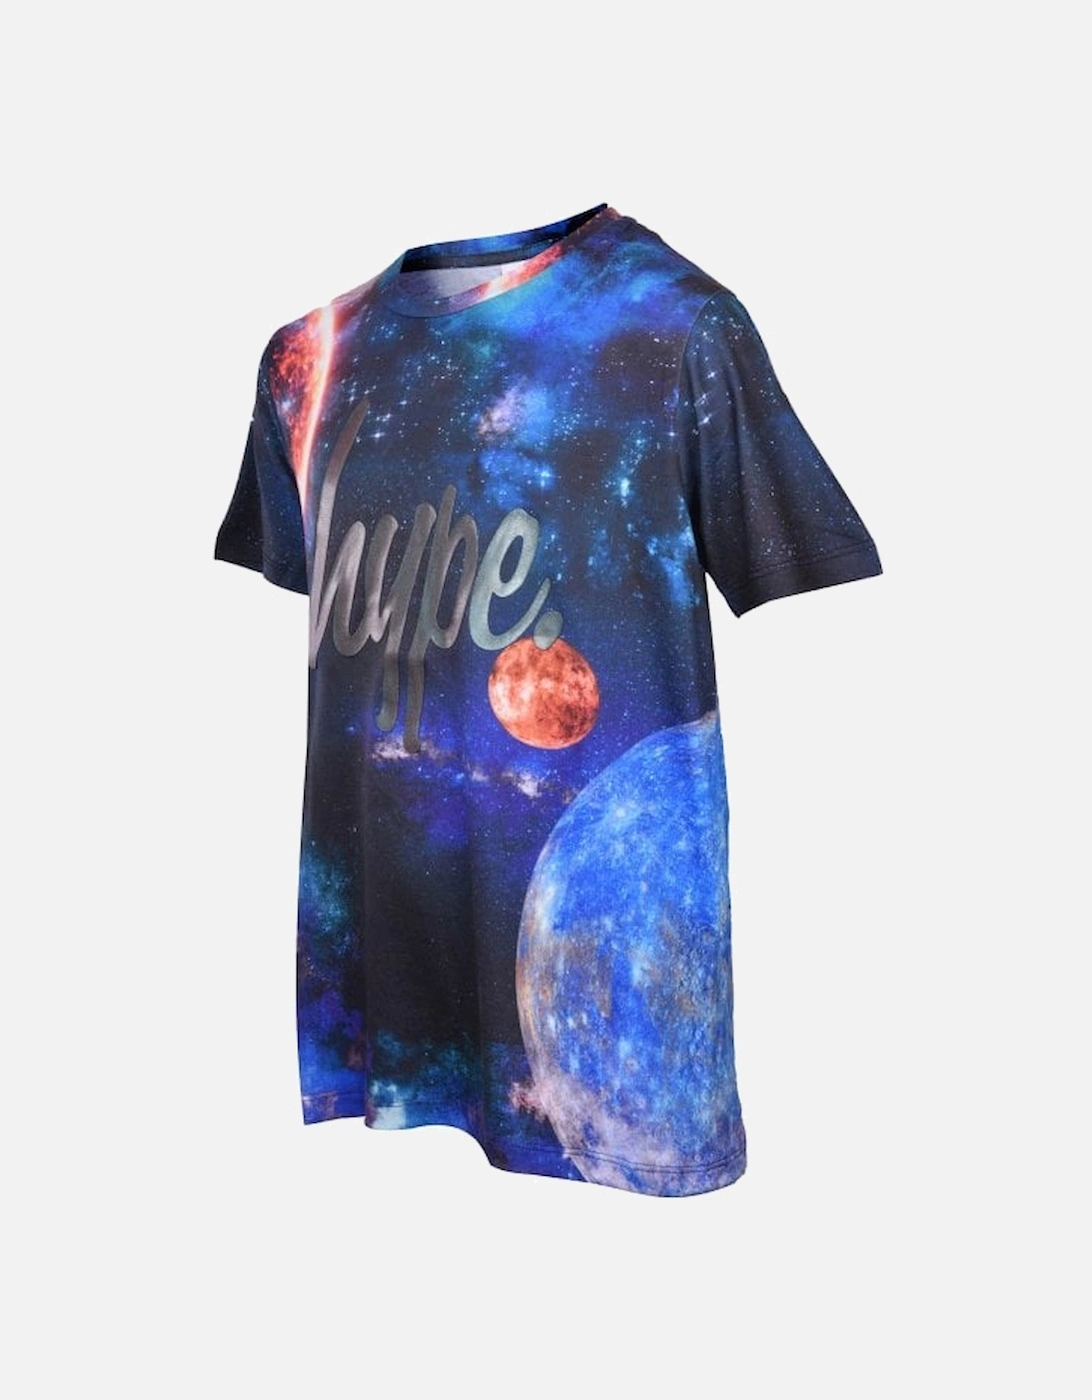 Boys Crew-Neck Space T-Shirt, Blue/multi